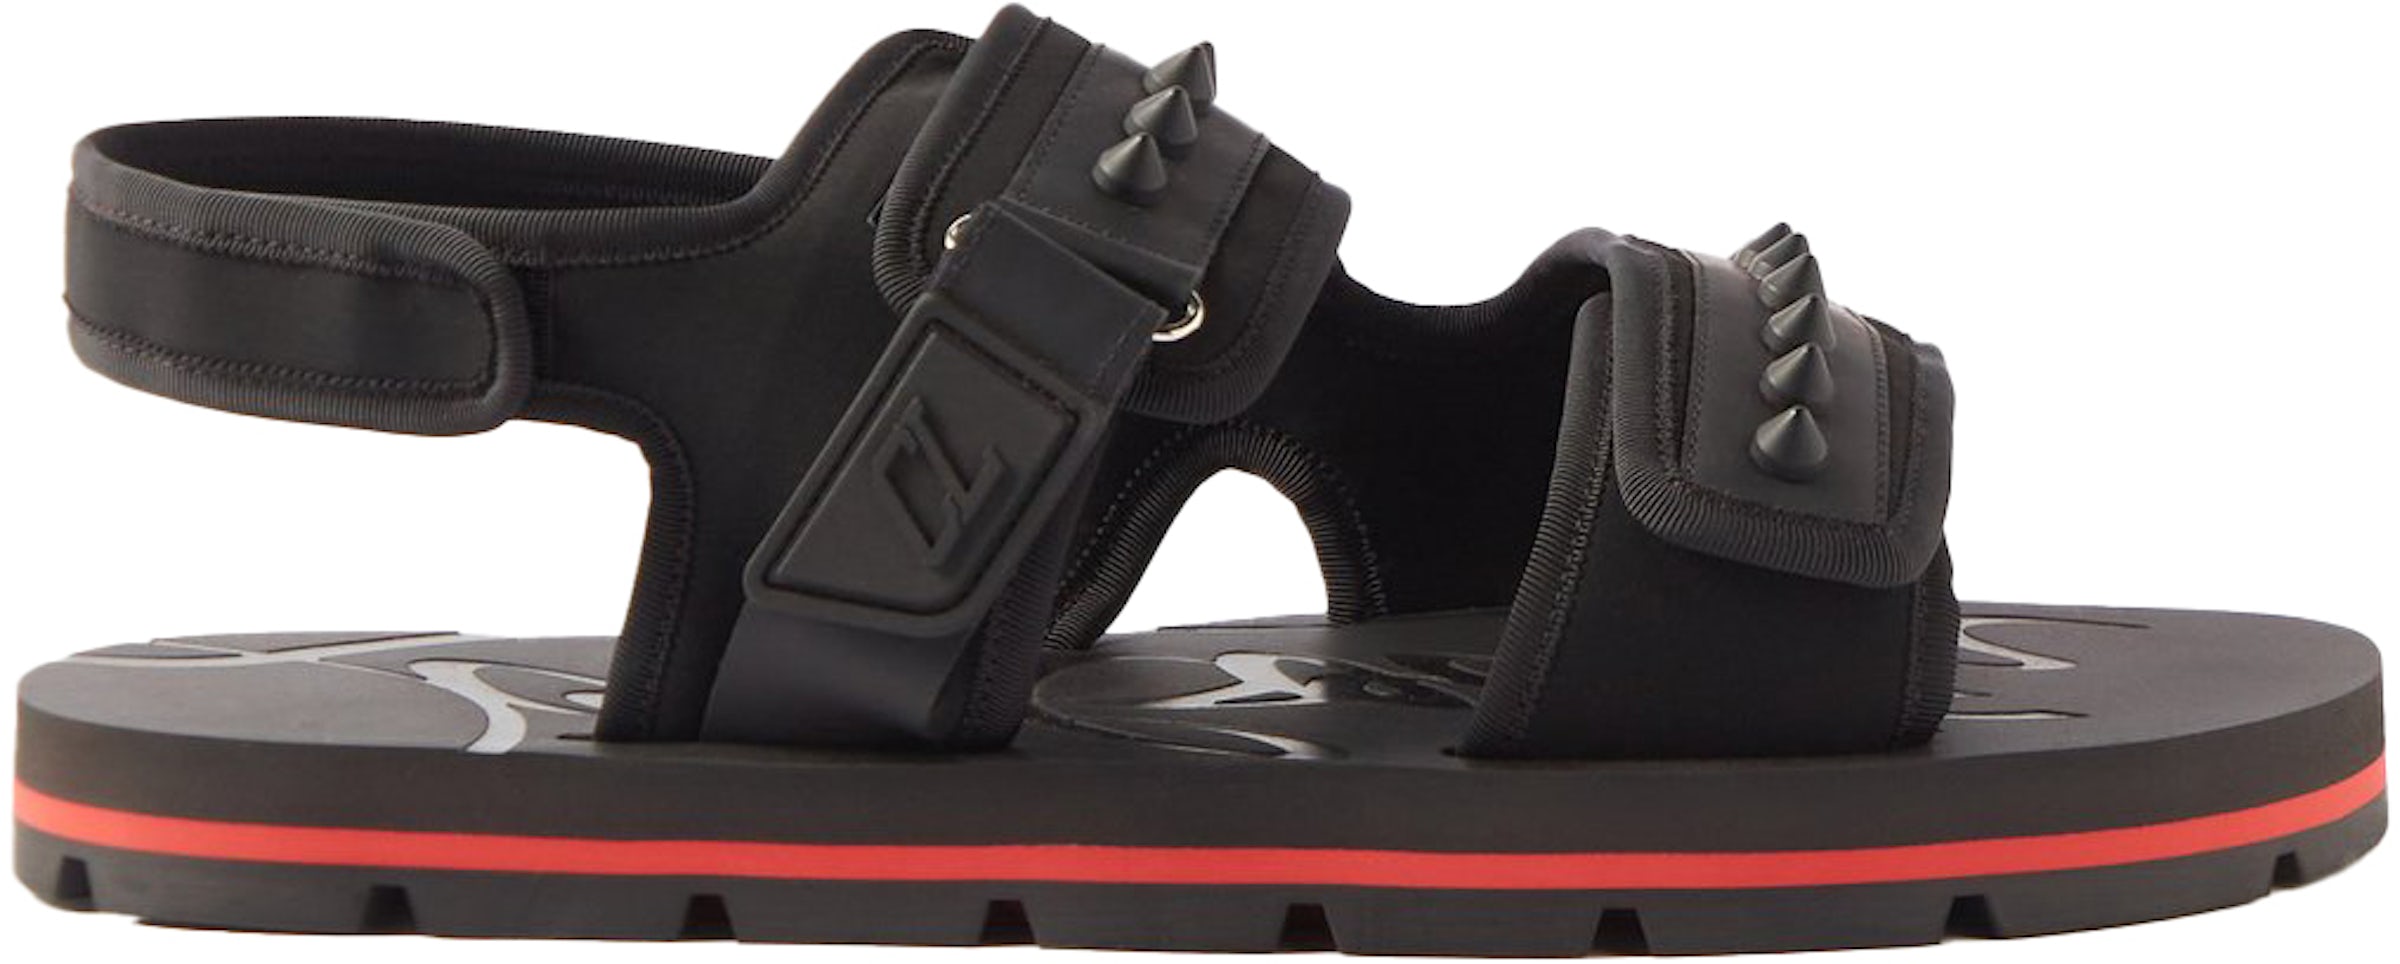 Christian Louboutin Pool Fun Men's Black Slide Sandals New Size 40 US 7